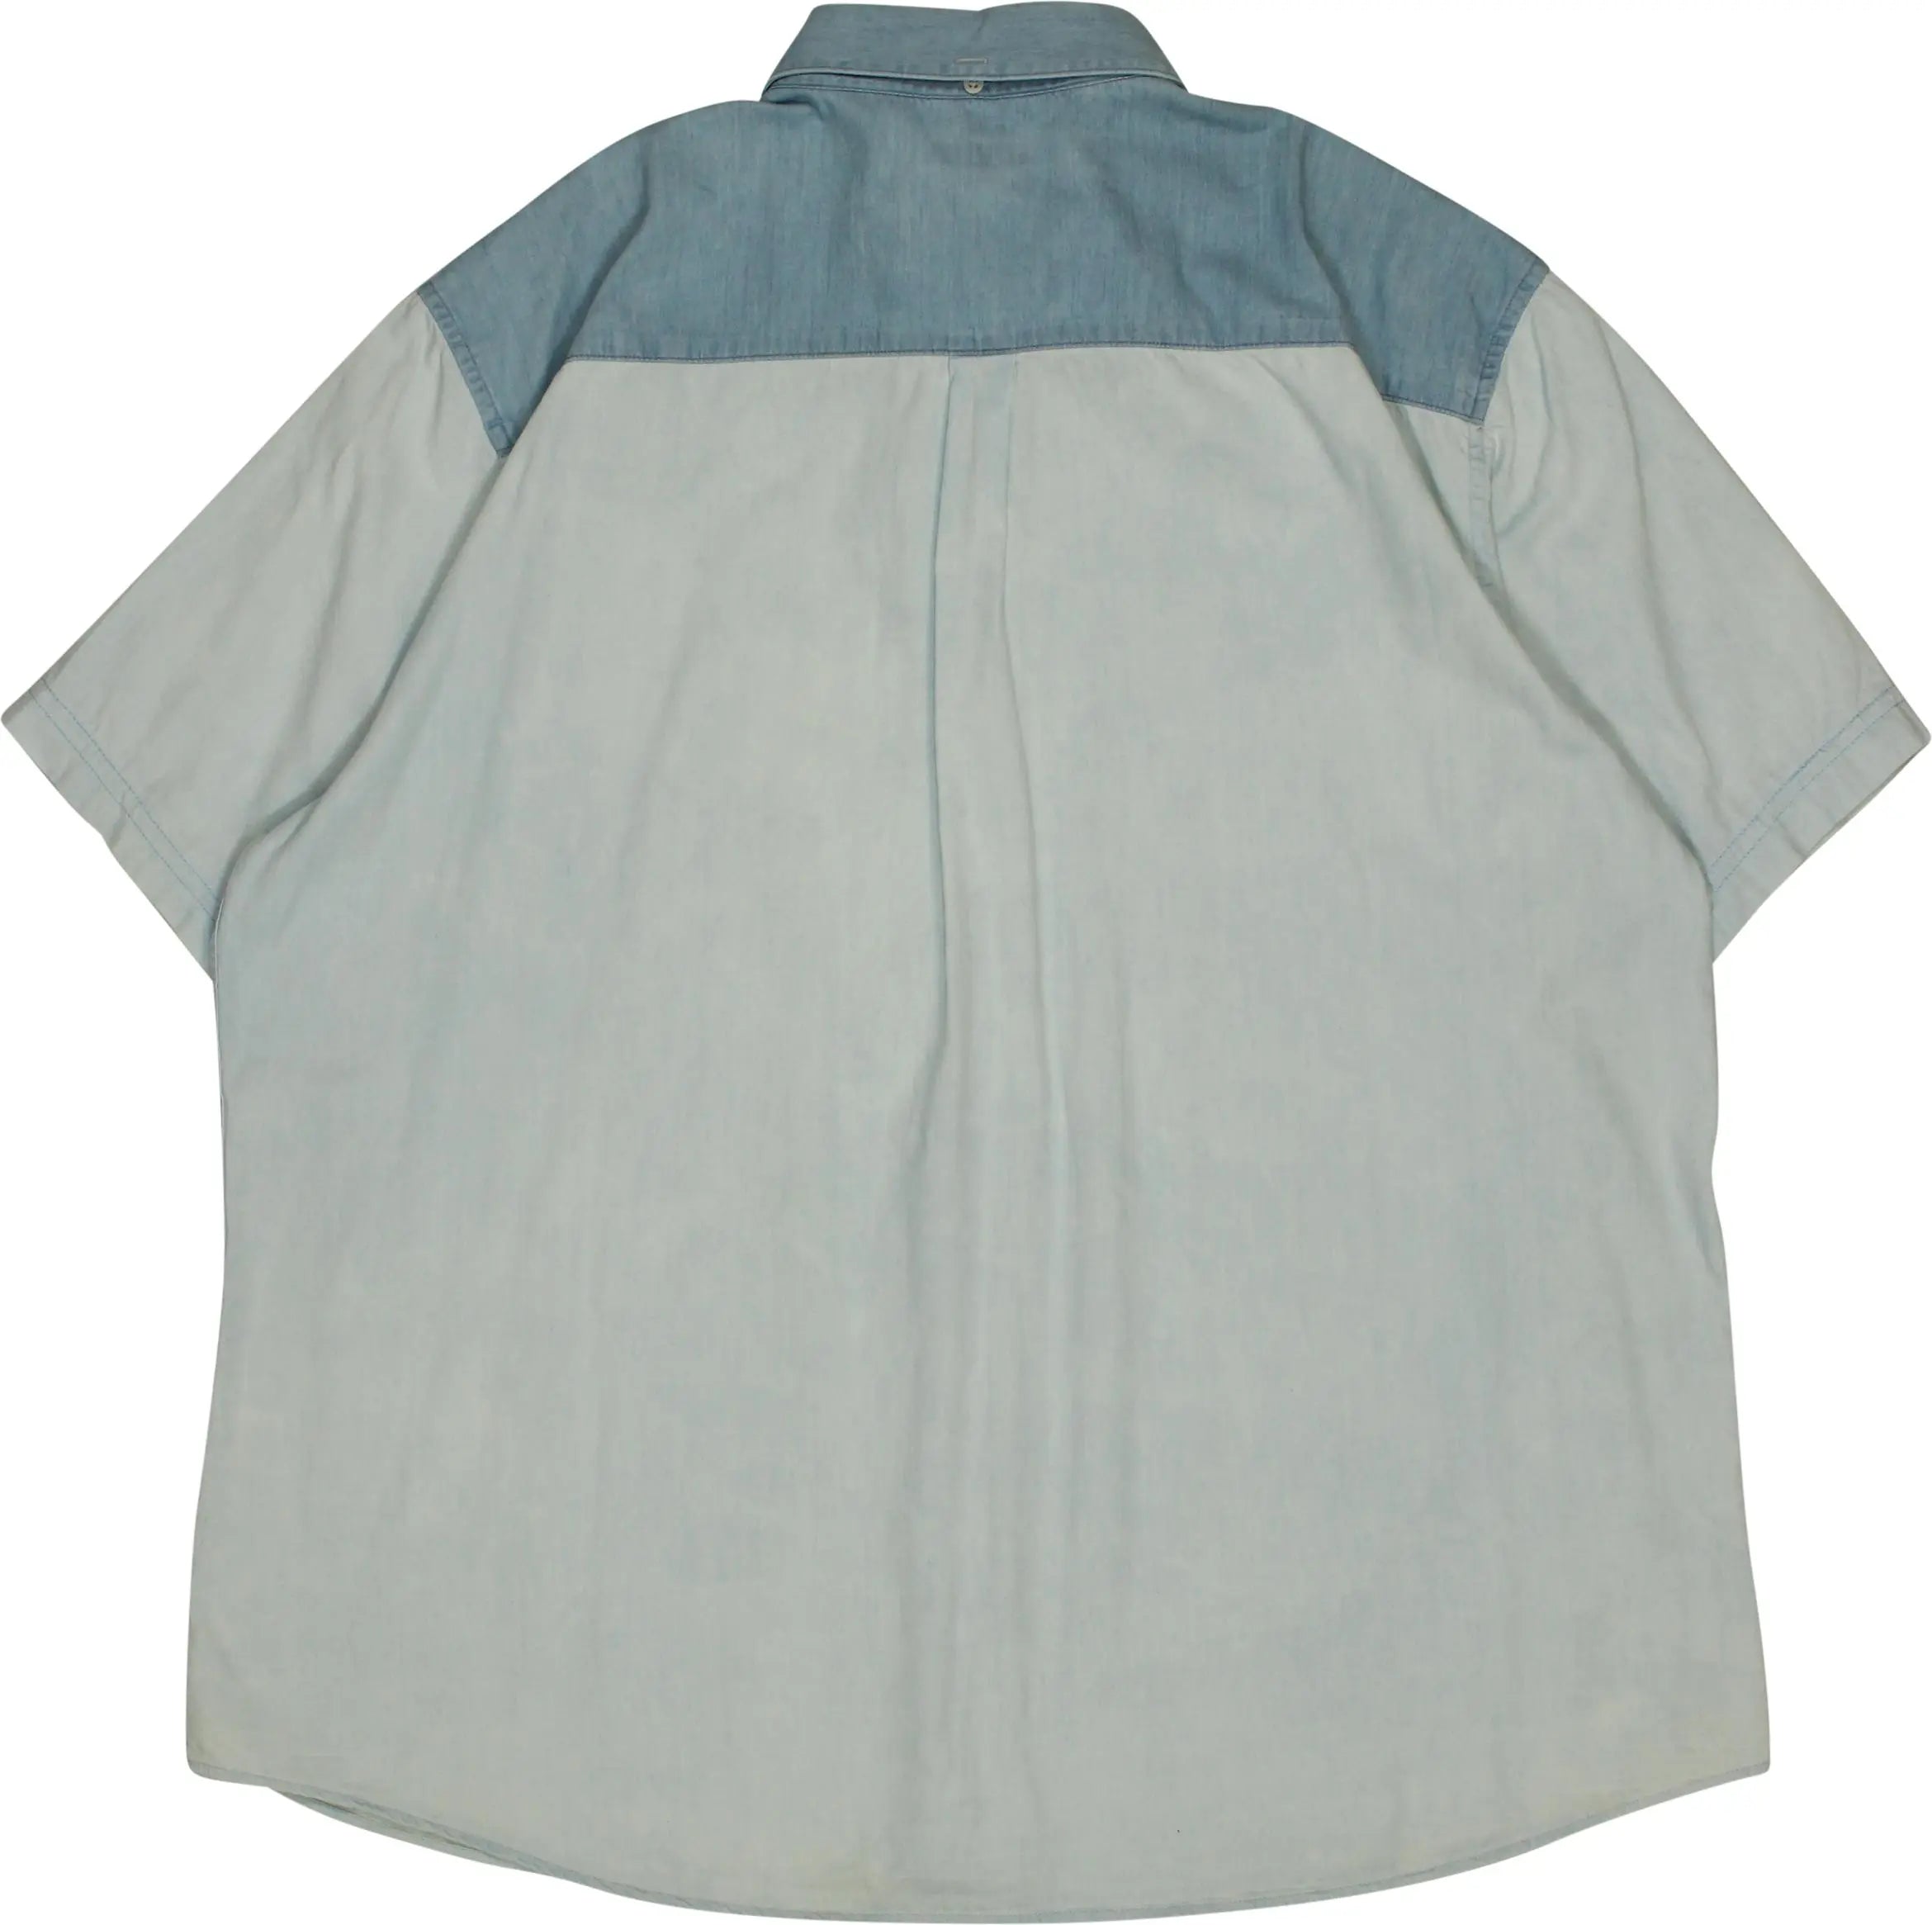 Dressmann - Slim Fit Denim Short Sleeve Shirt- ThriftTale.com - Vintage and second handclothing